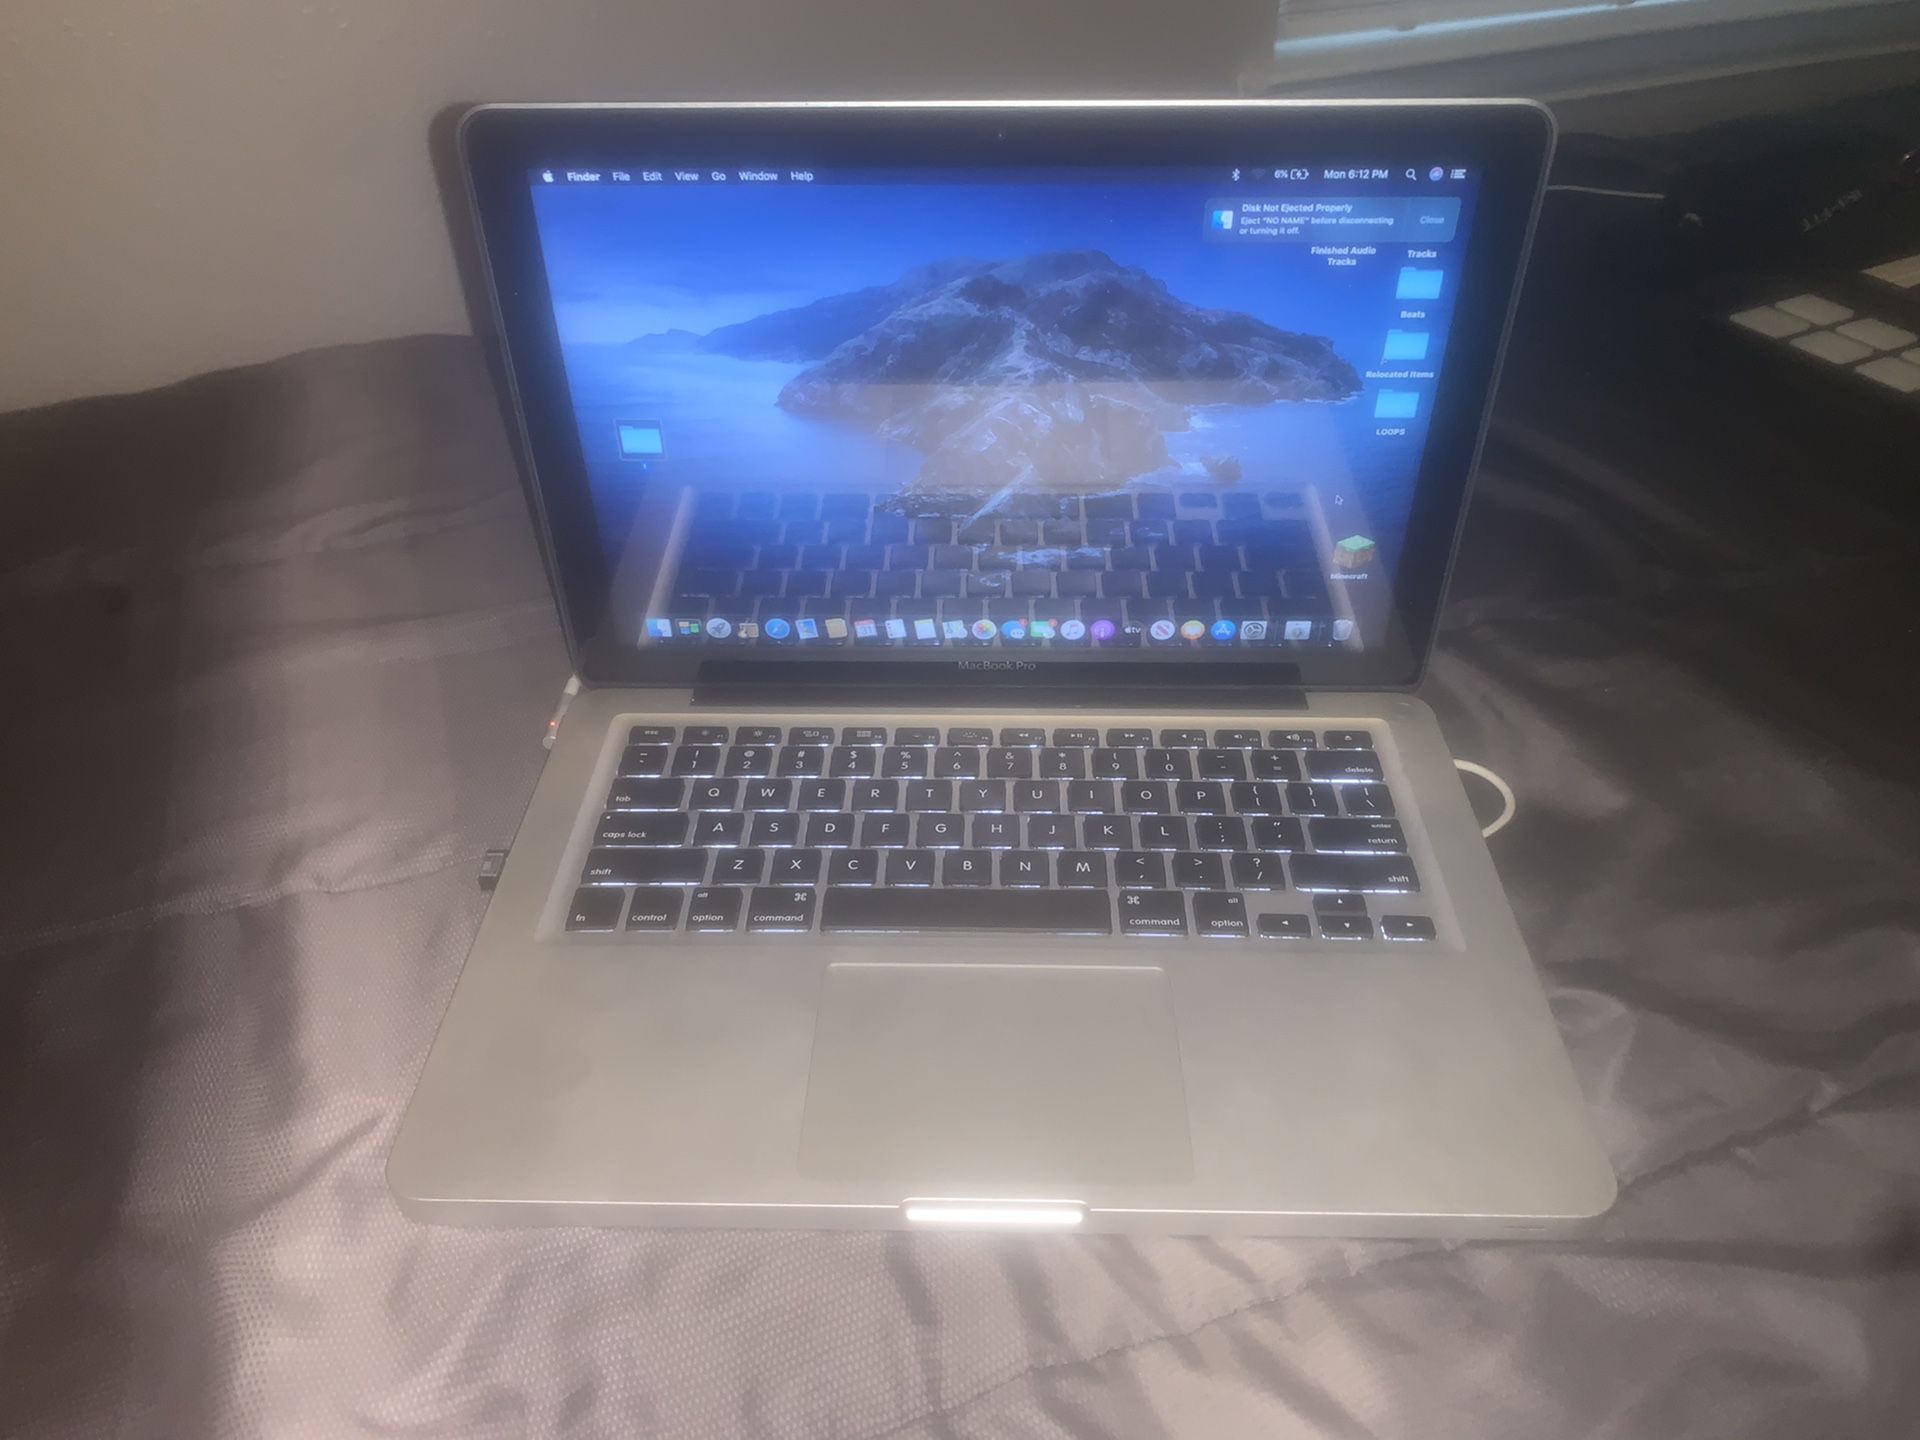 Macebook Pro (13-inch, Mid 2012)